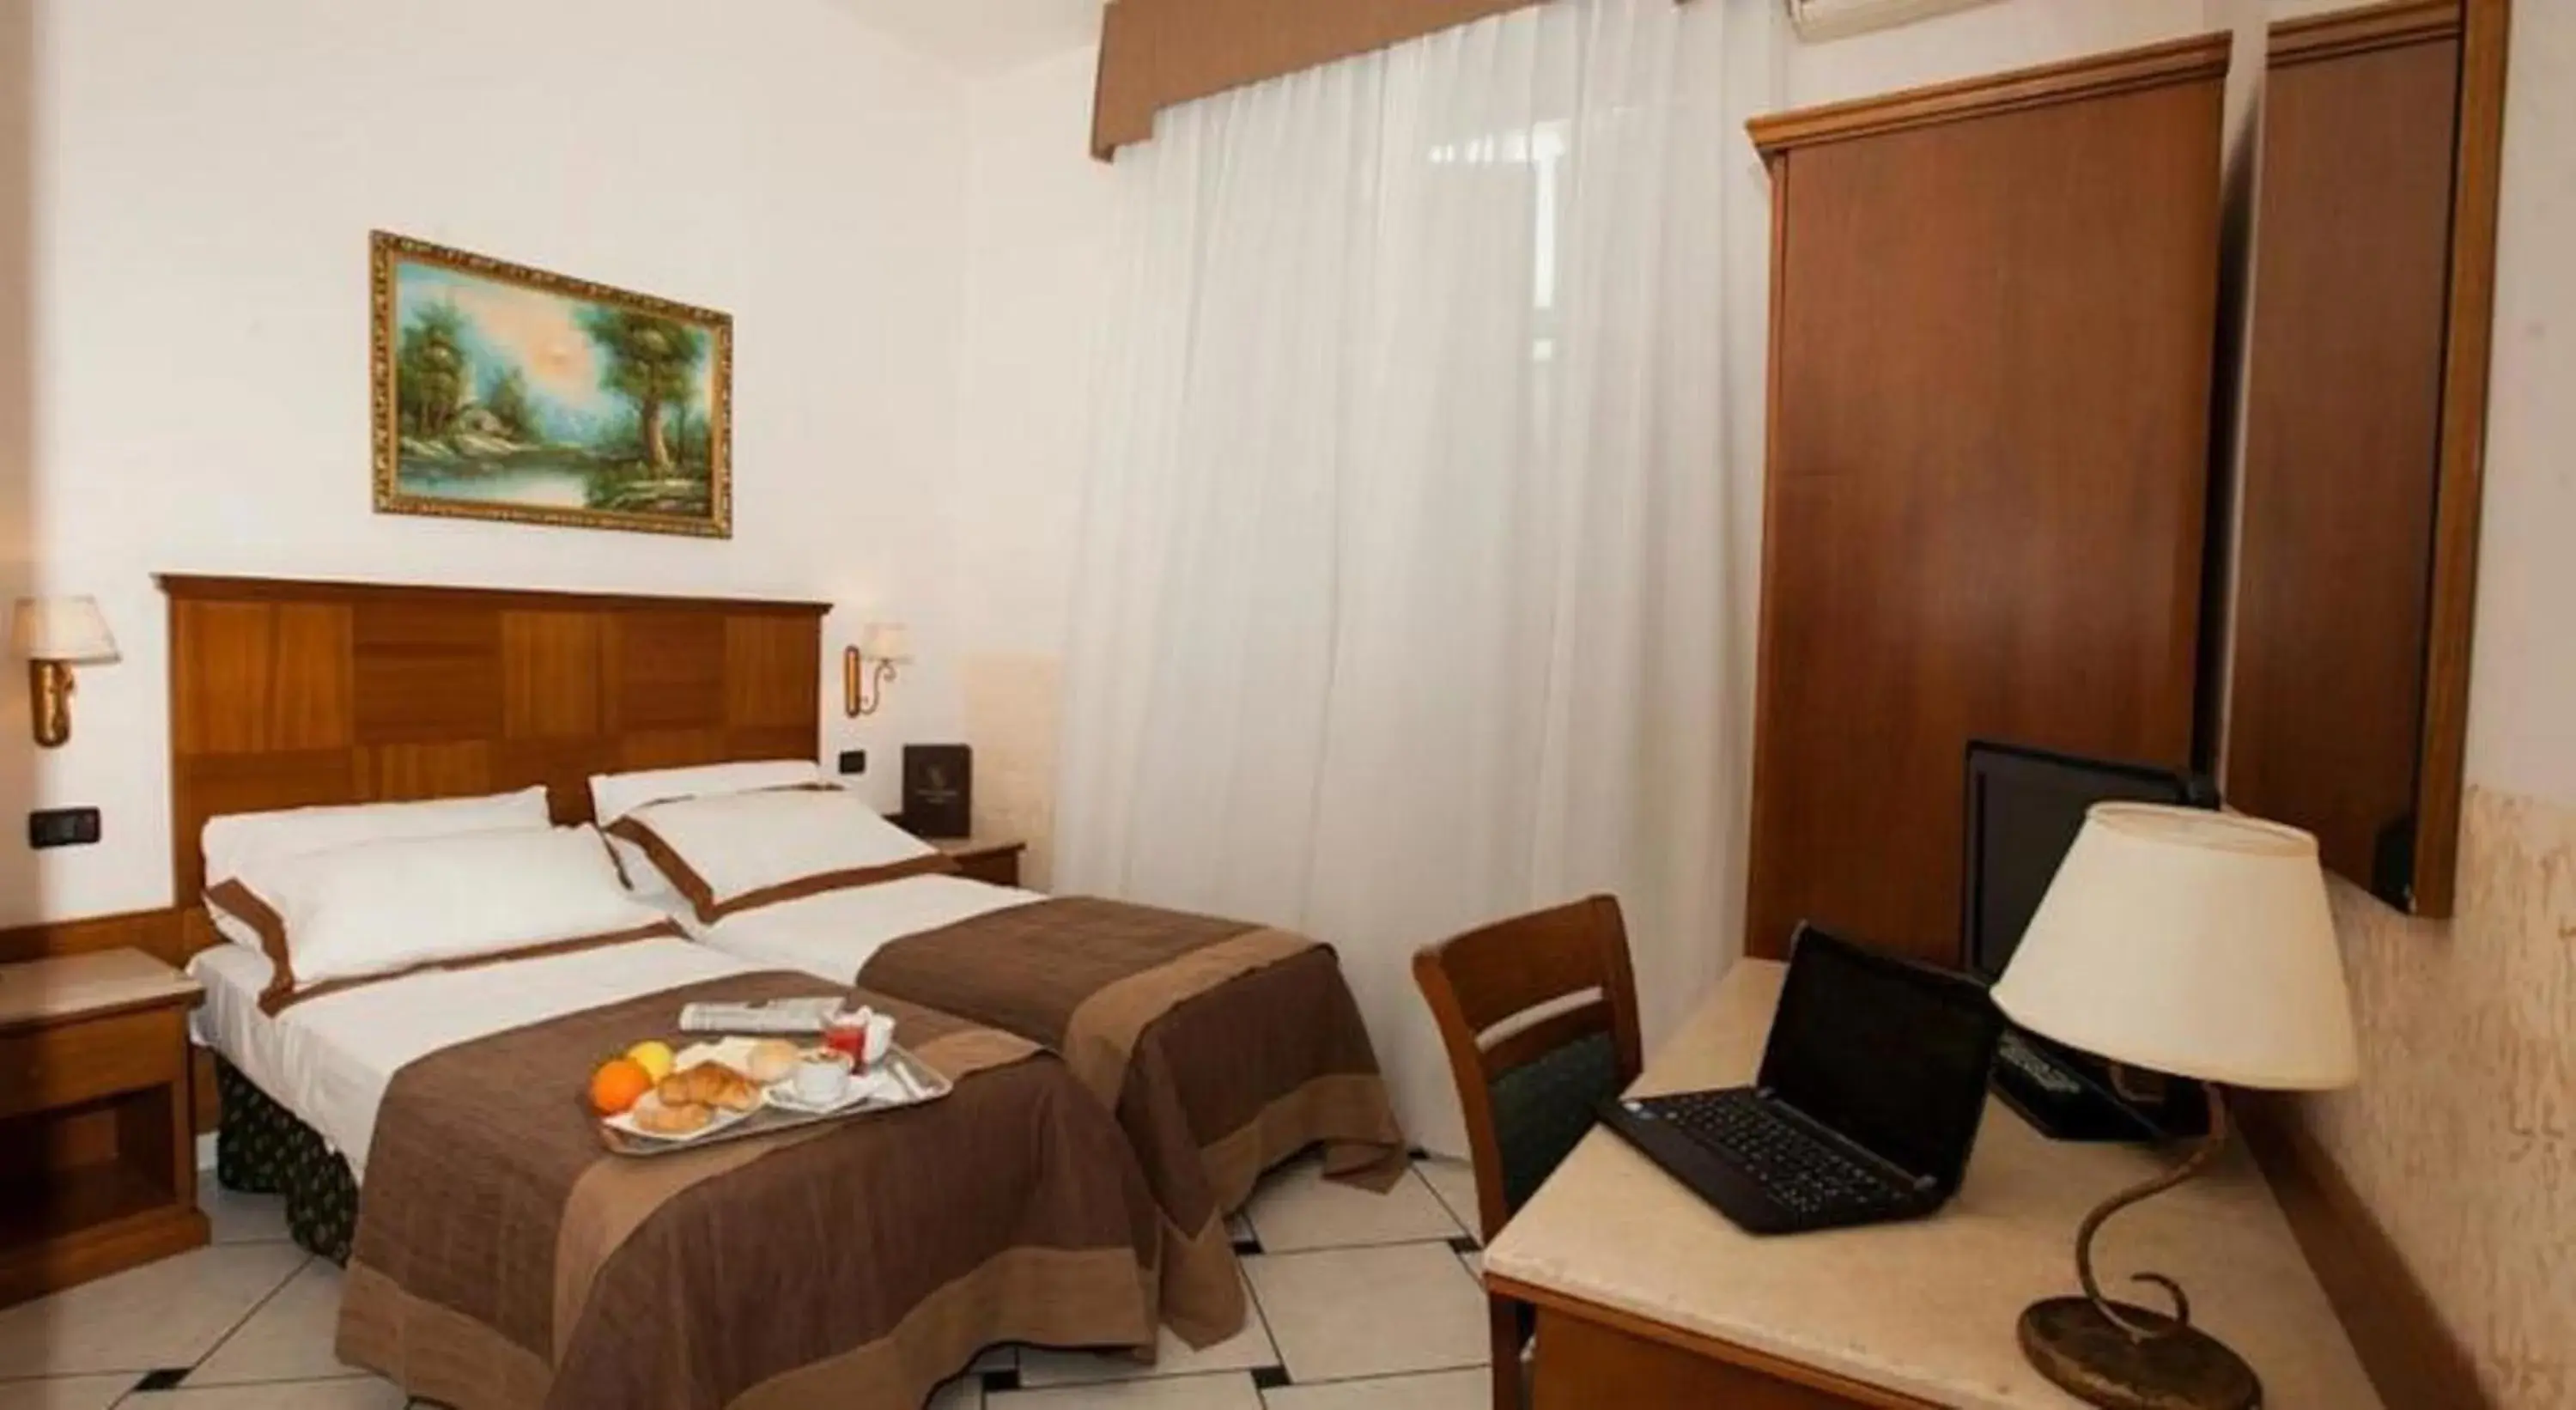 Bed, Room Photo in Hotel Garibaldi